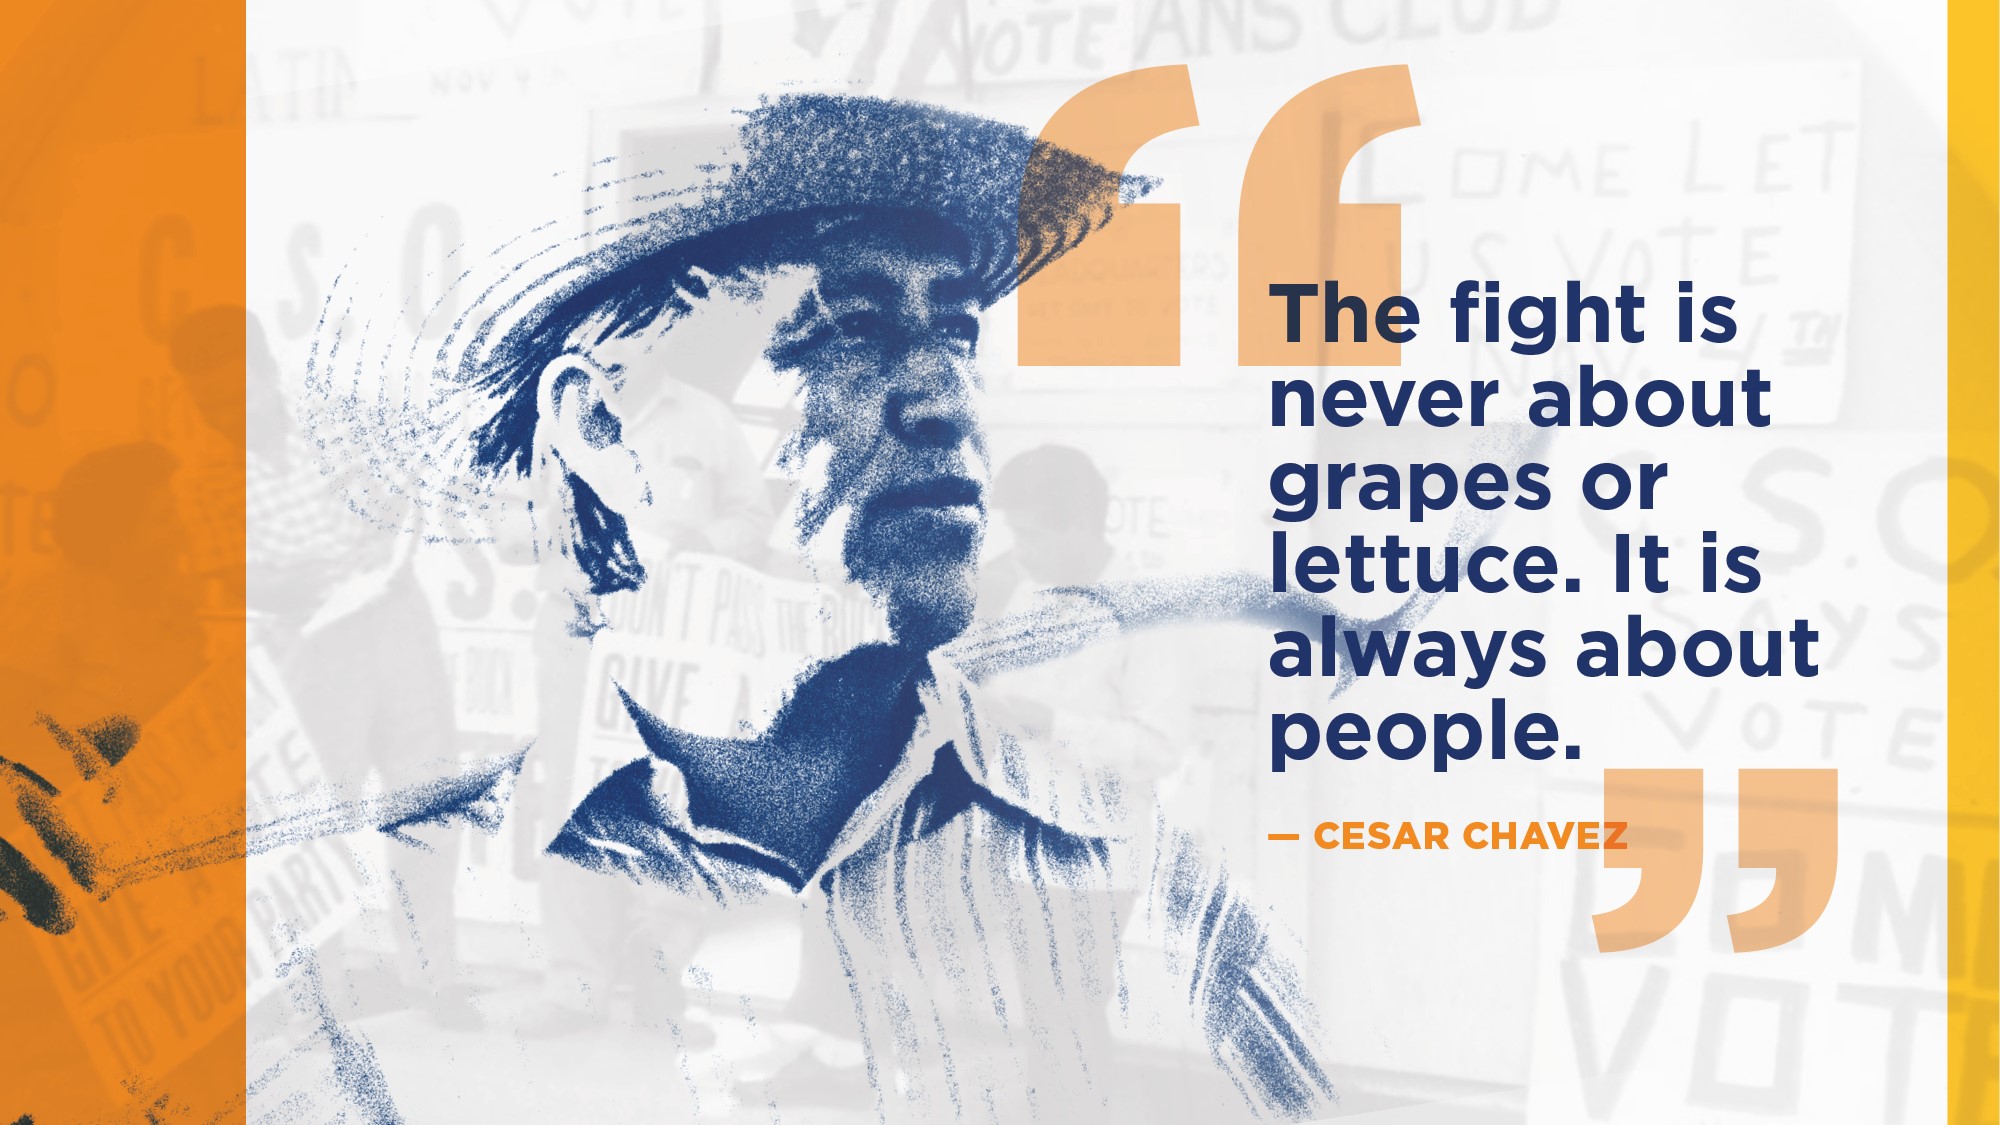 Cesar Chavez, United Farm Workers leader